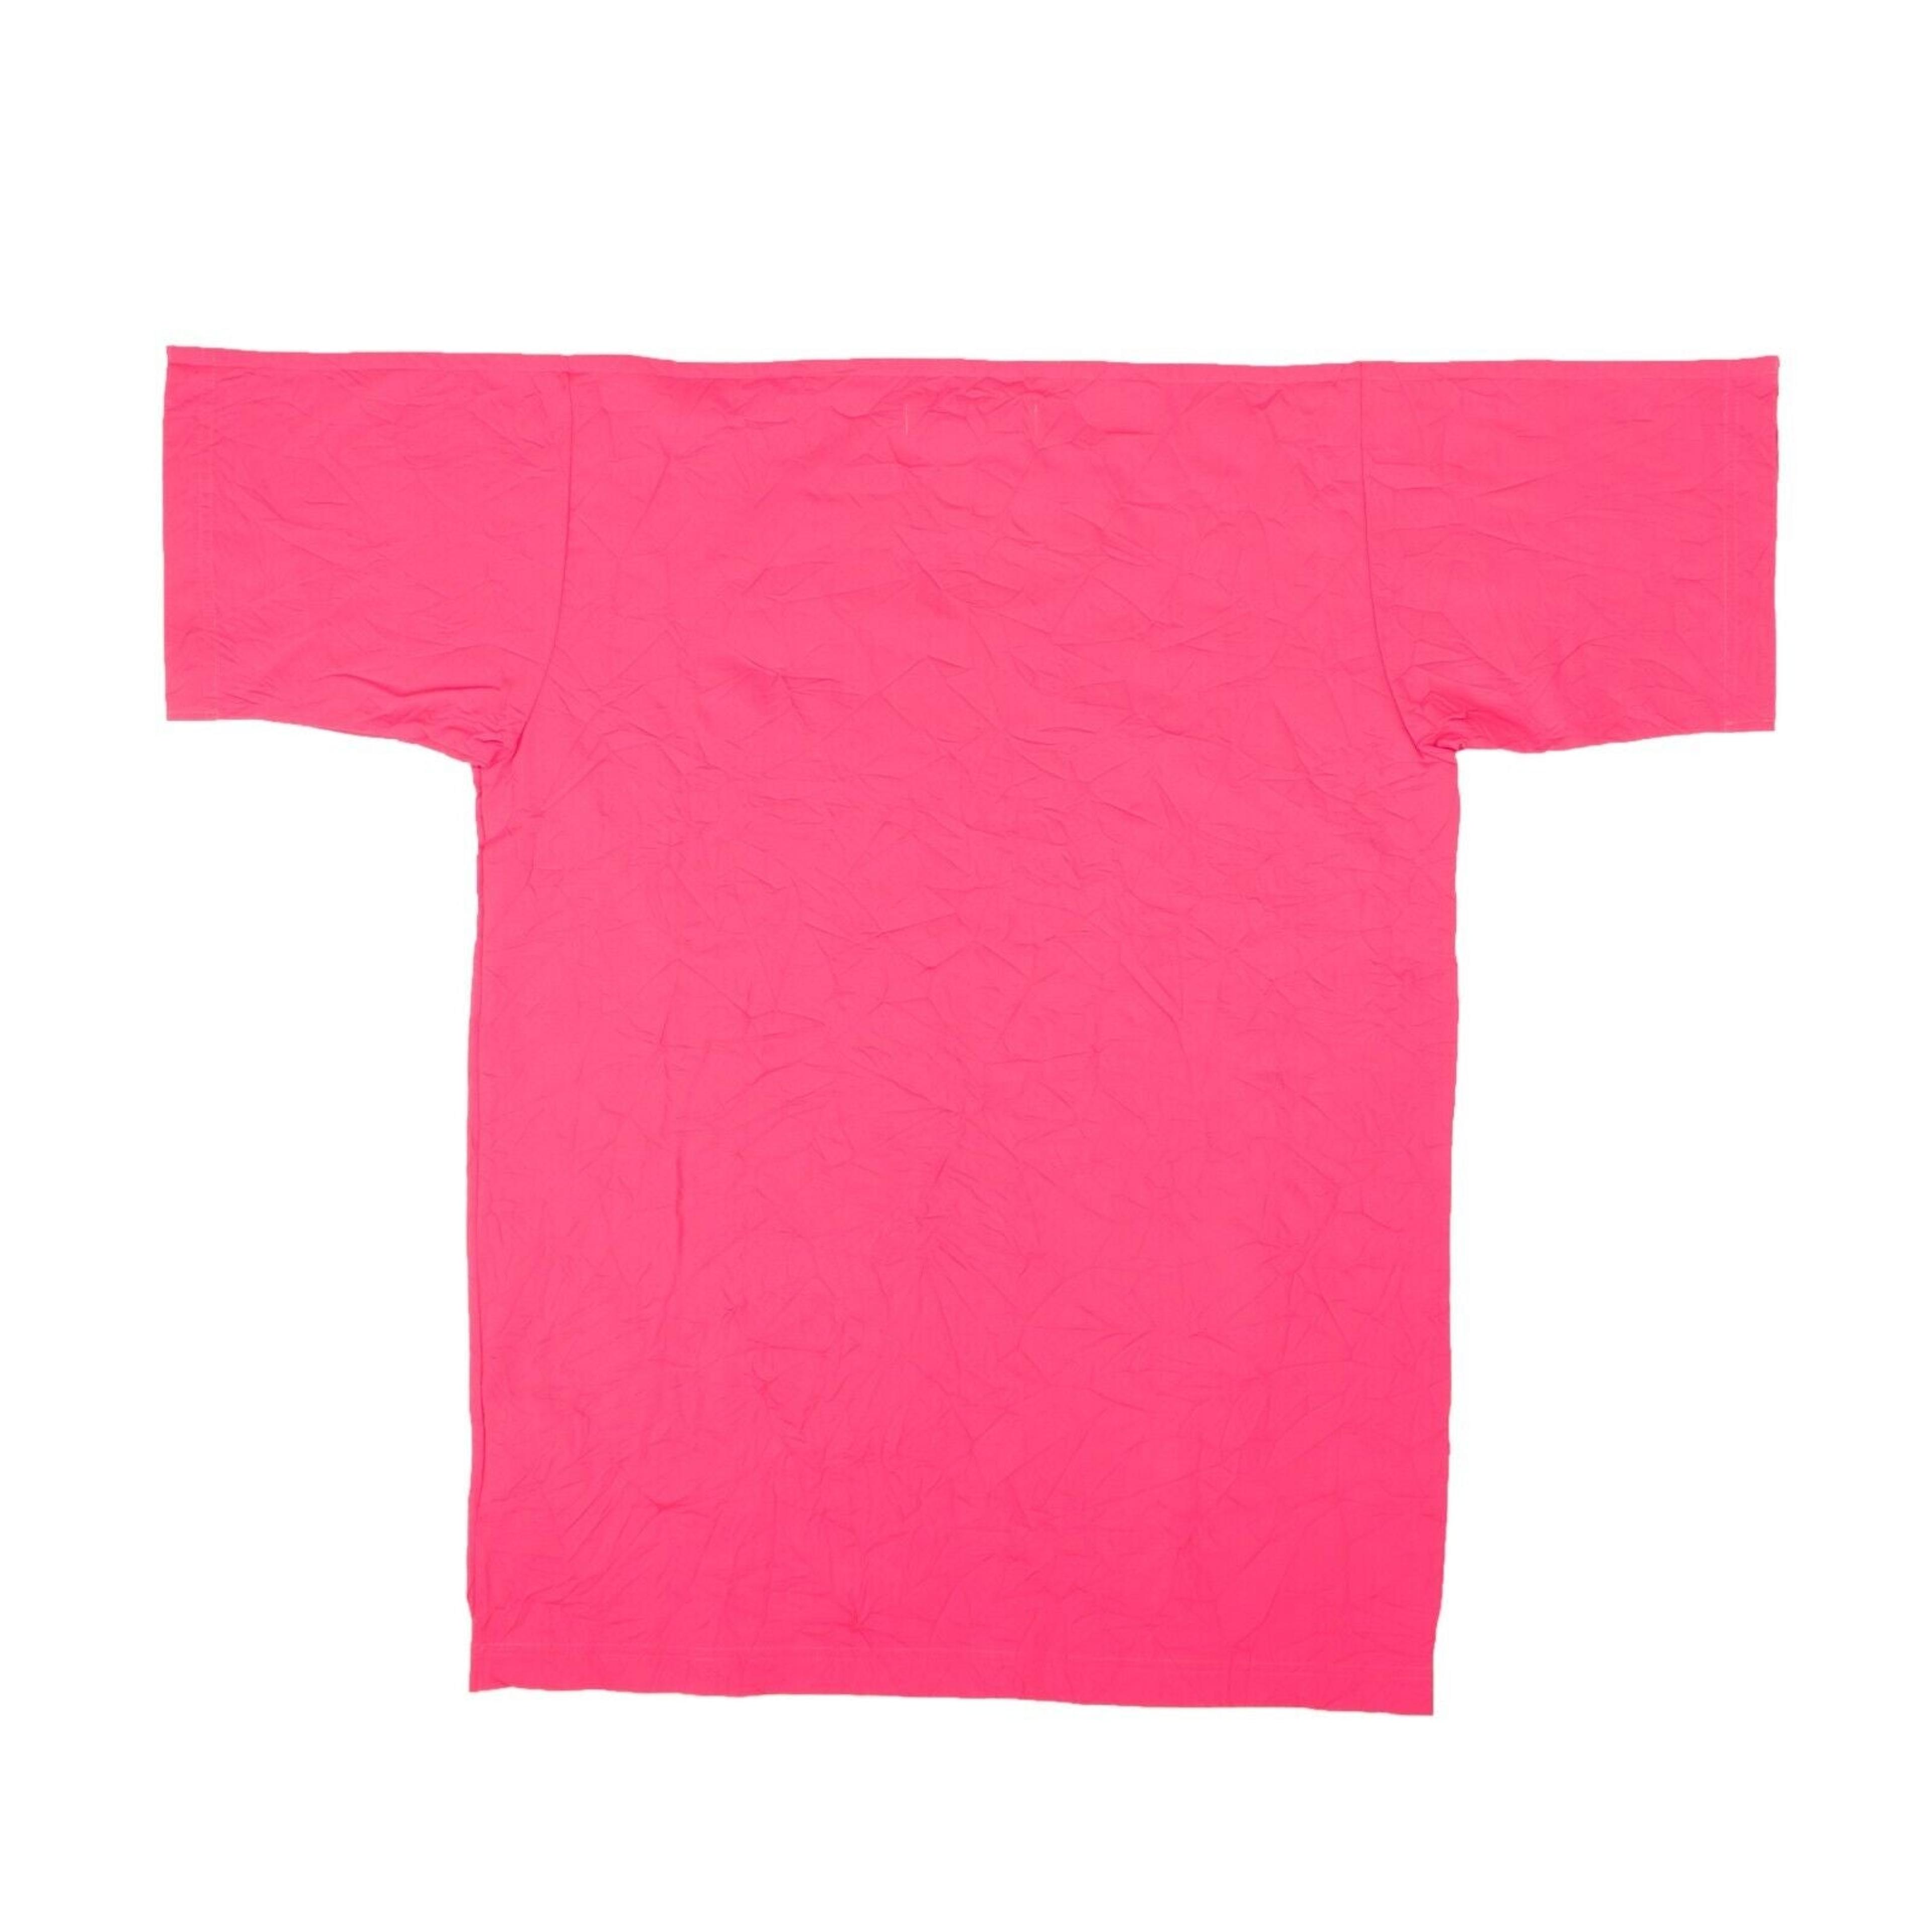 Alternate View 2 of Junya Watanabe Jet T-Shirt - Pink